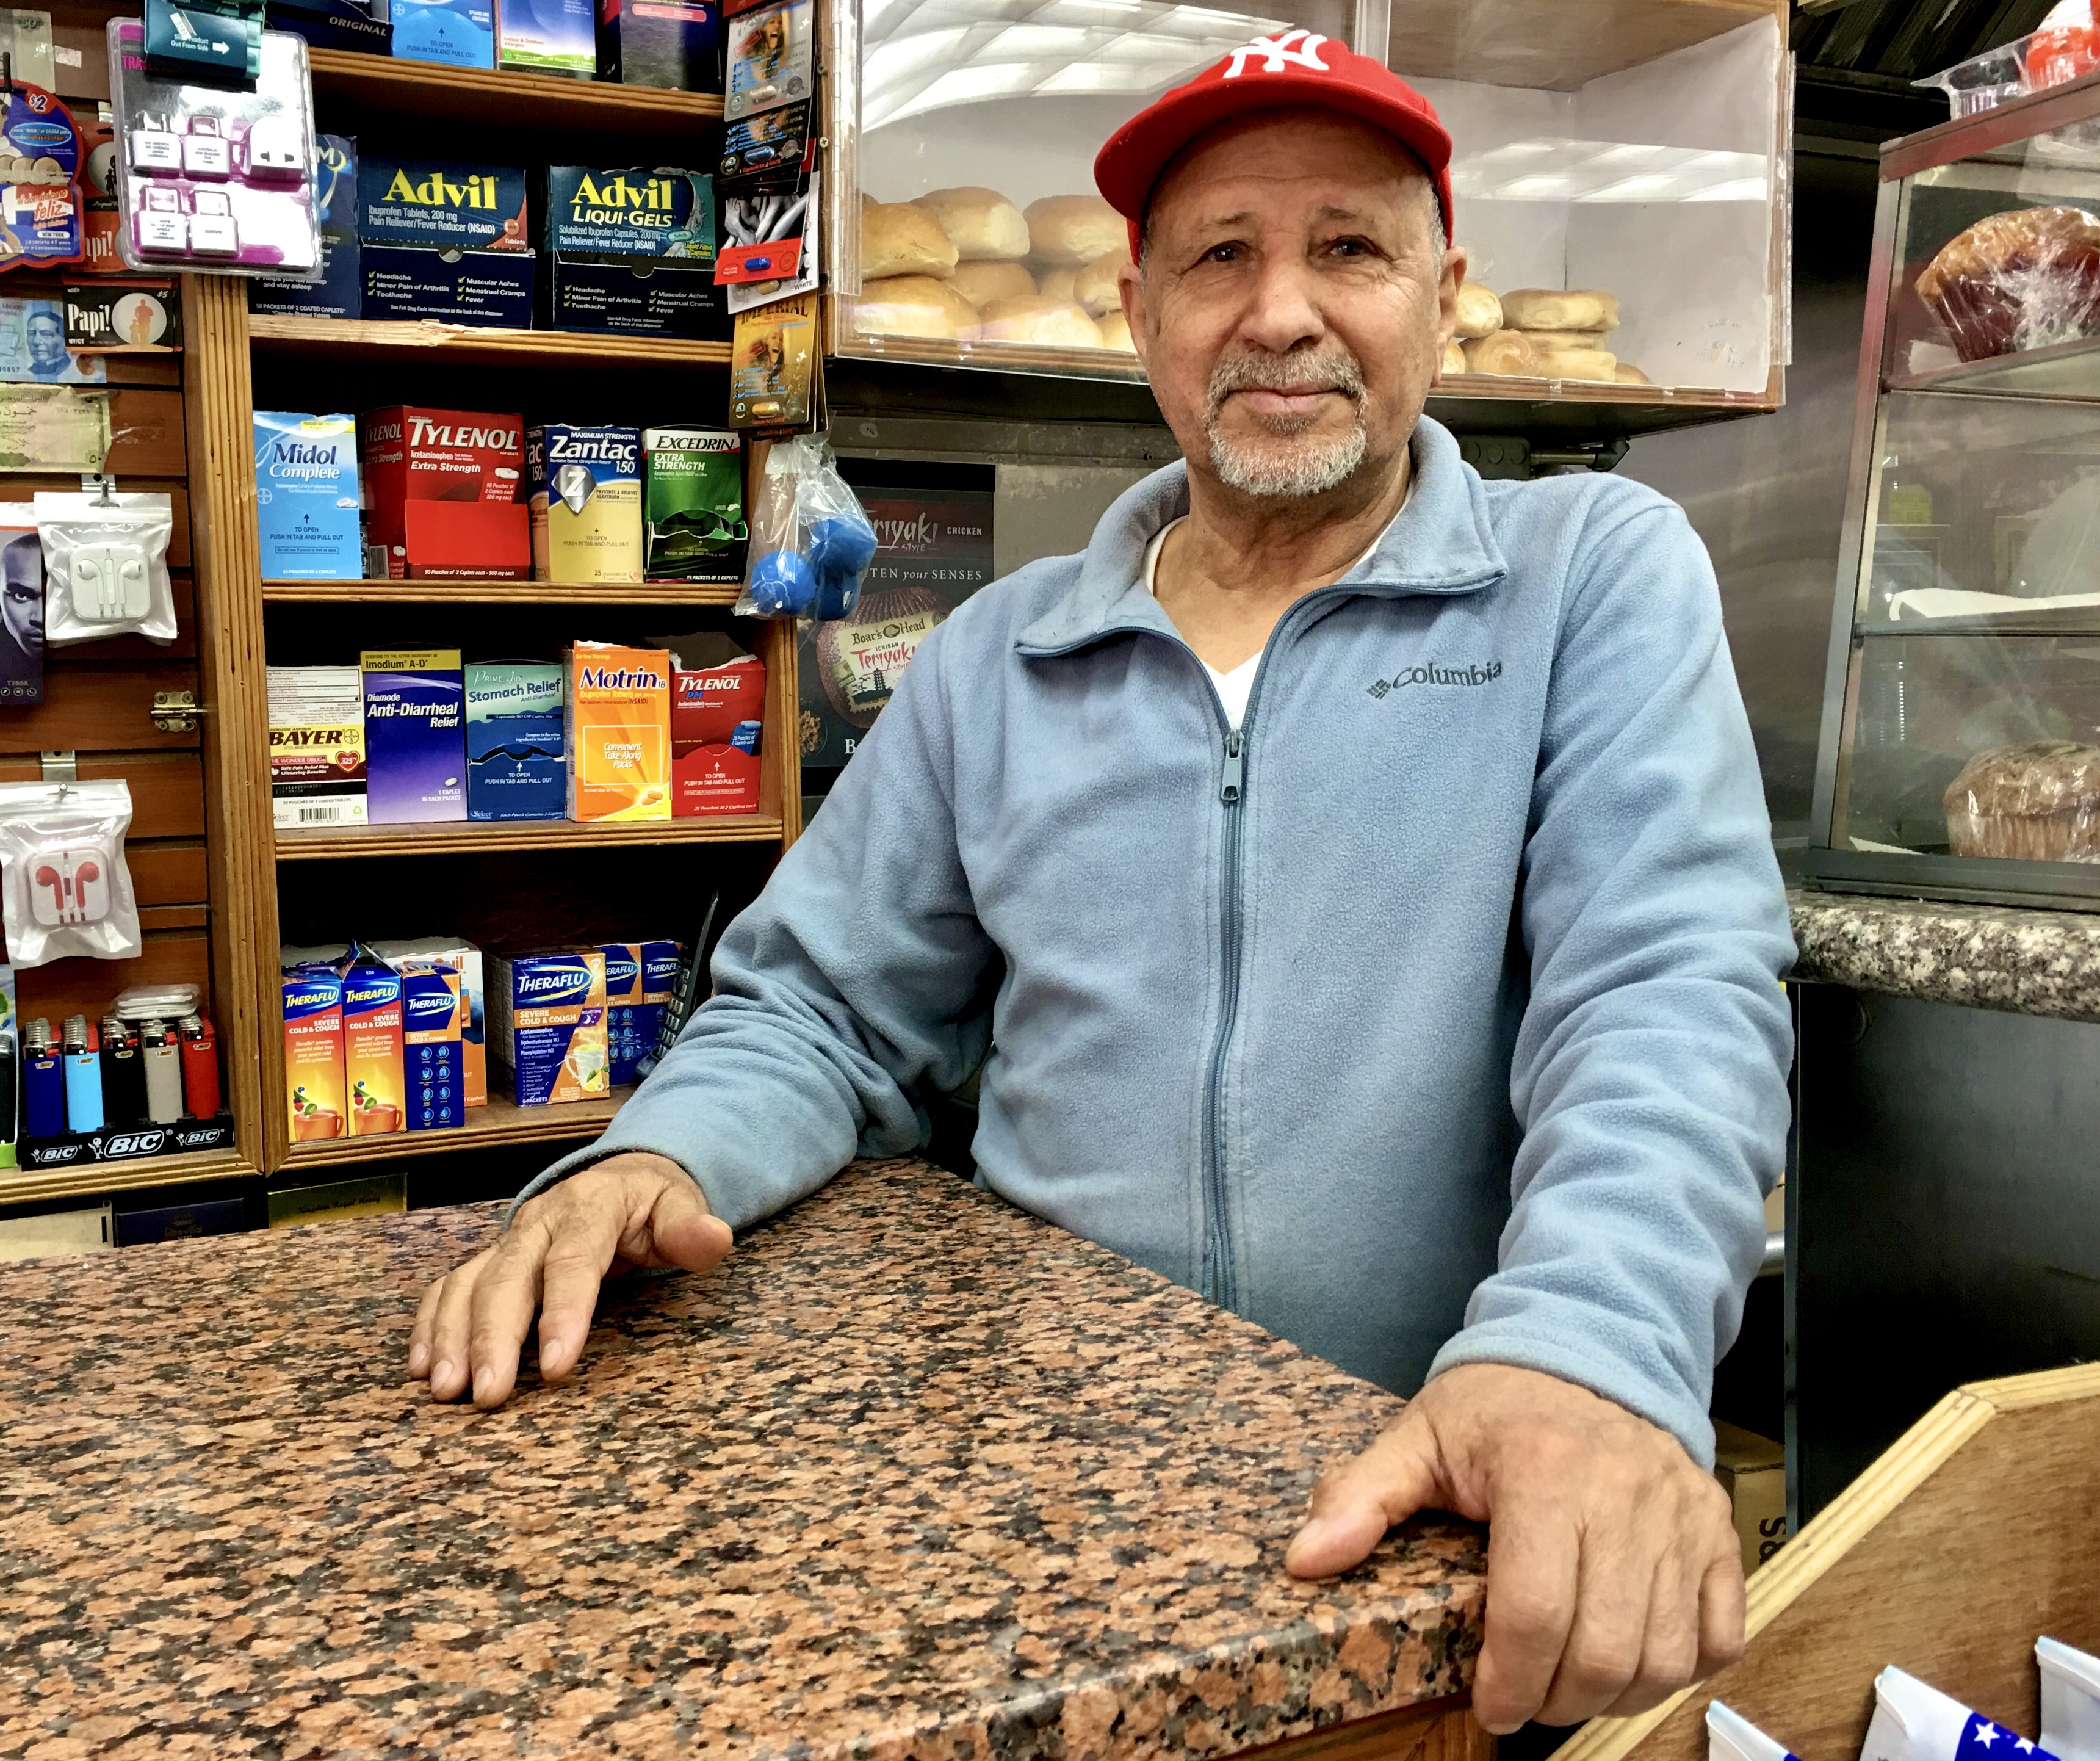 Kaid Alomari says his shop, Azzan Deli Grocery, lost money the day of the water-main break. Photo: Lore Croghan/Brooklyn Eagle